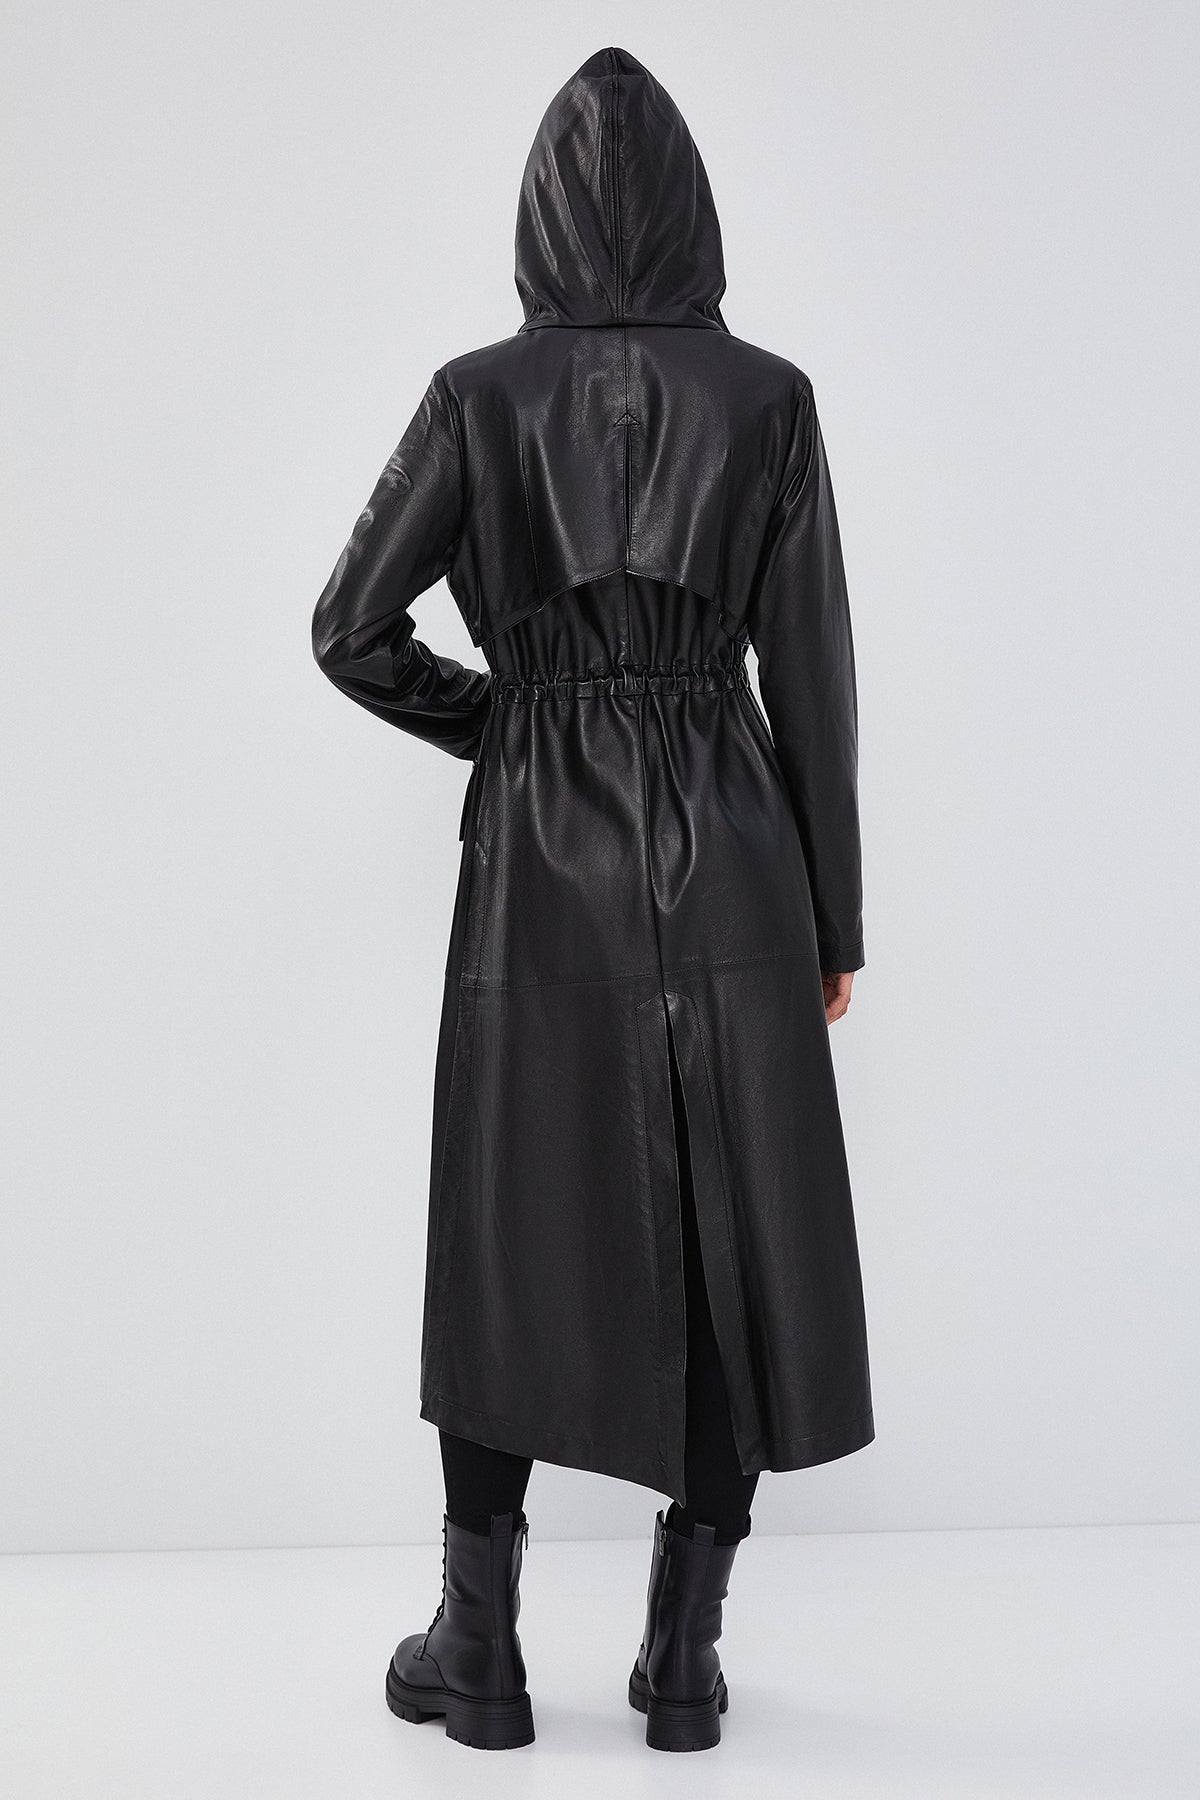 Rihanna Women's Black Hooded Leather Topcoat